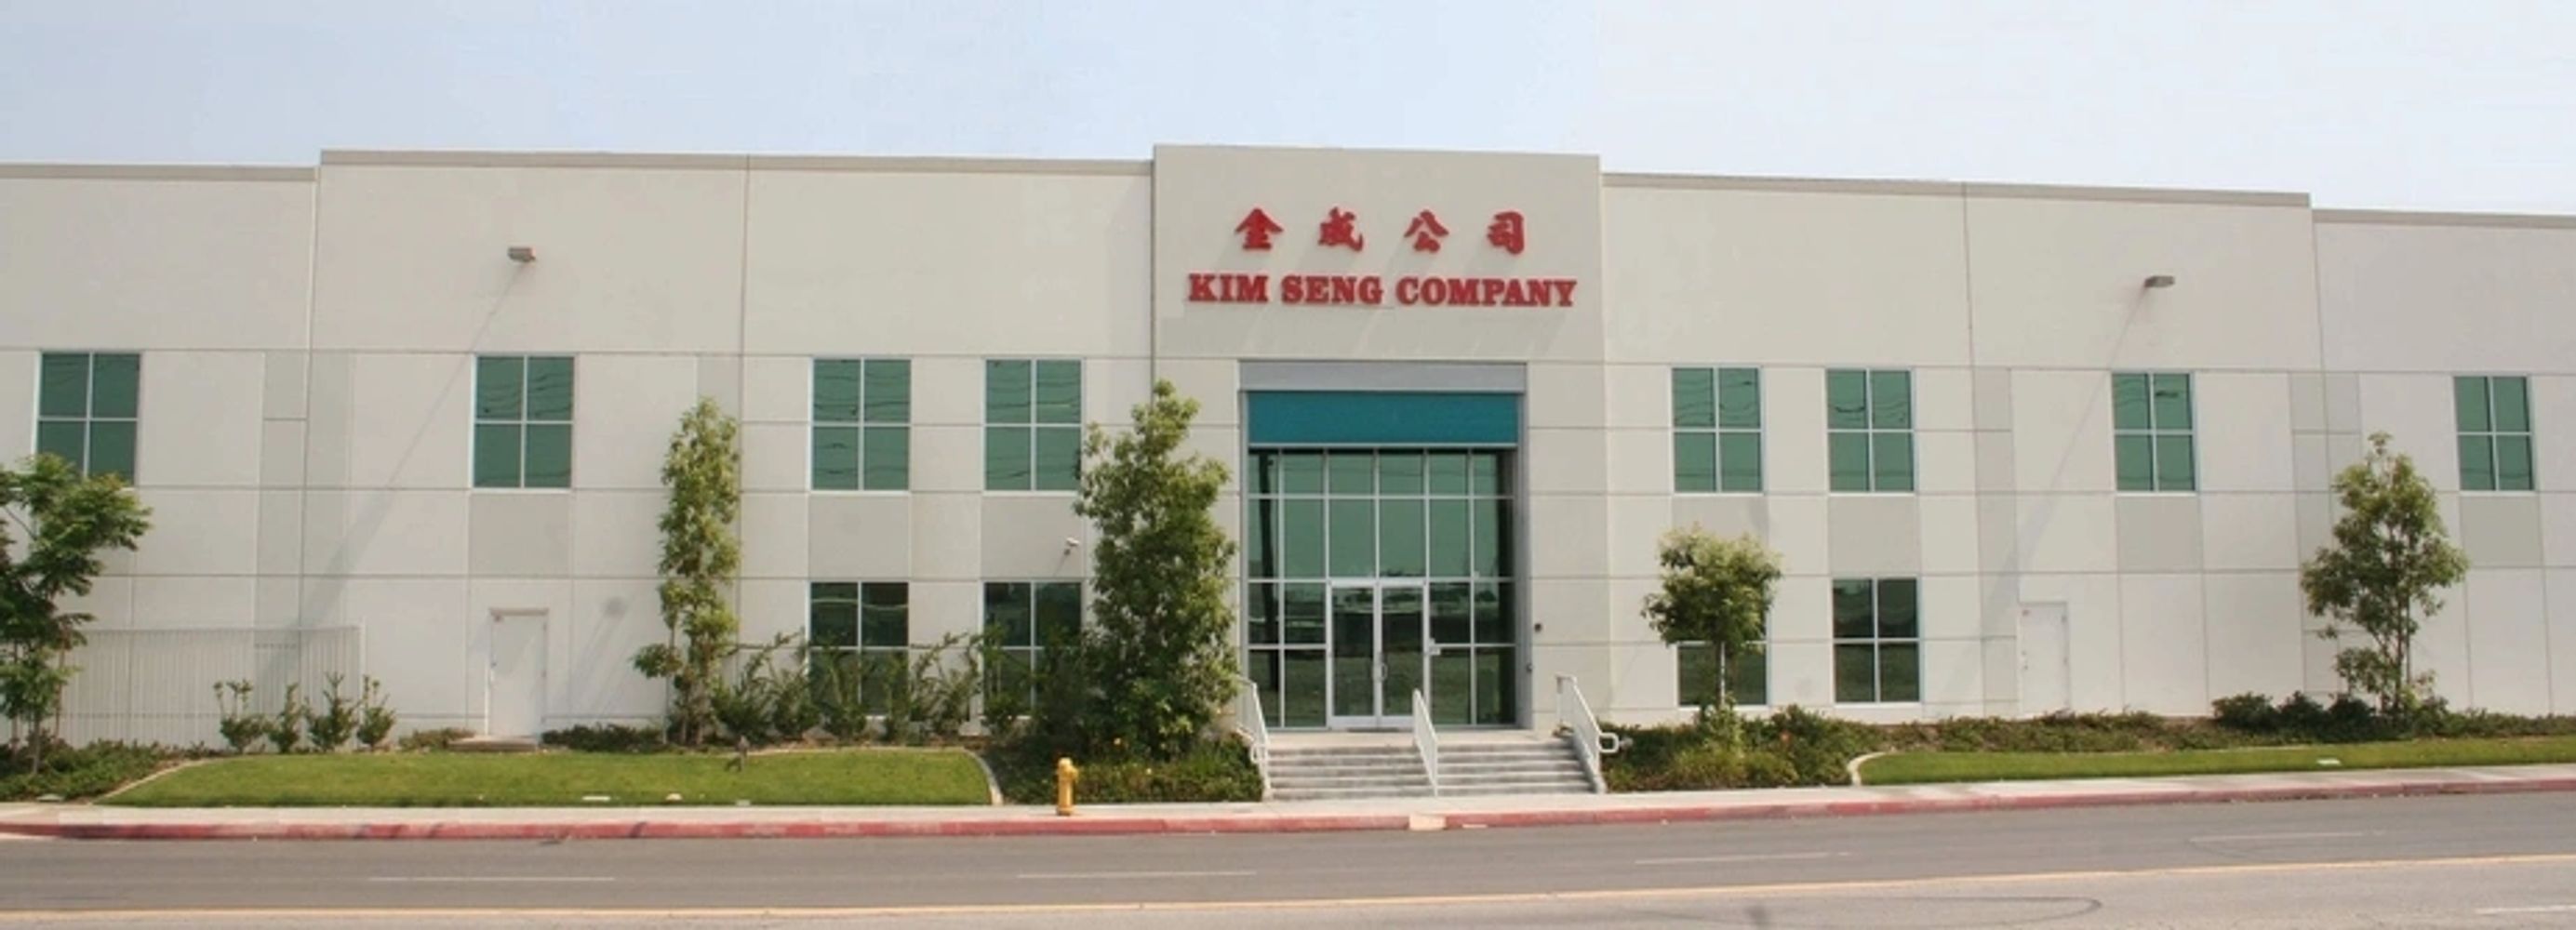 Kim Seng Company